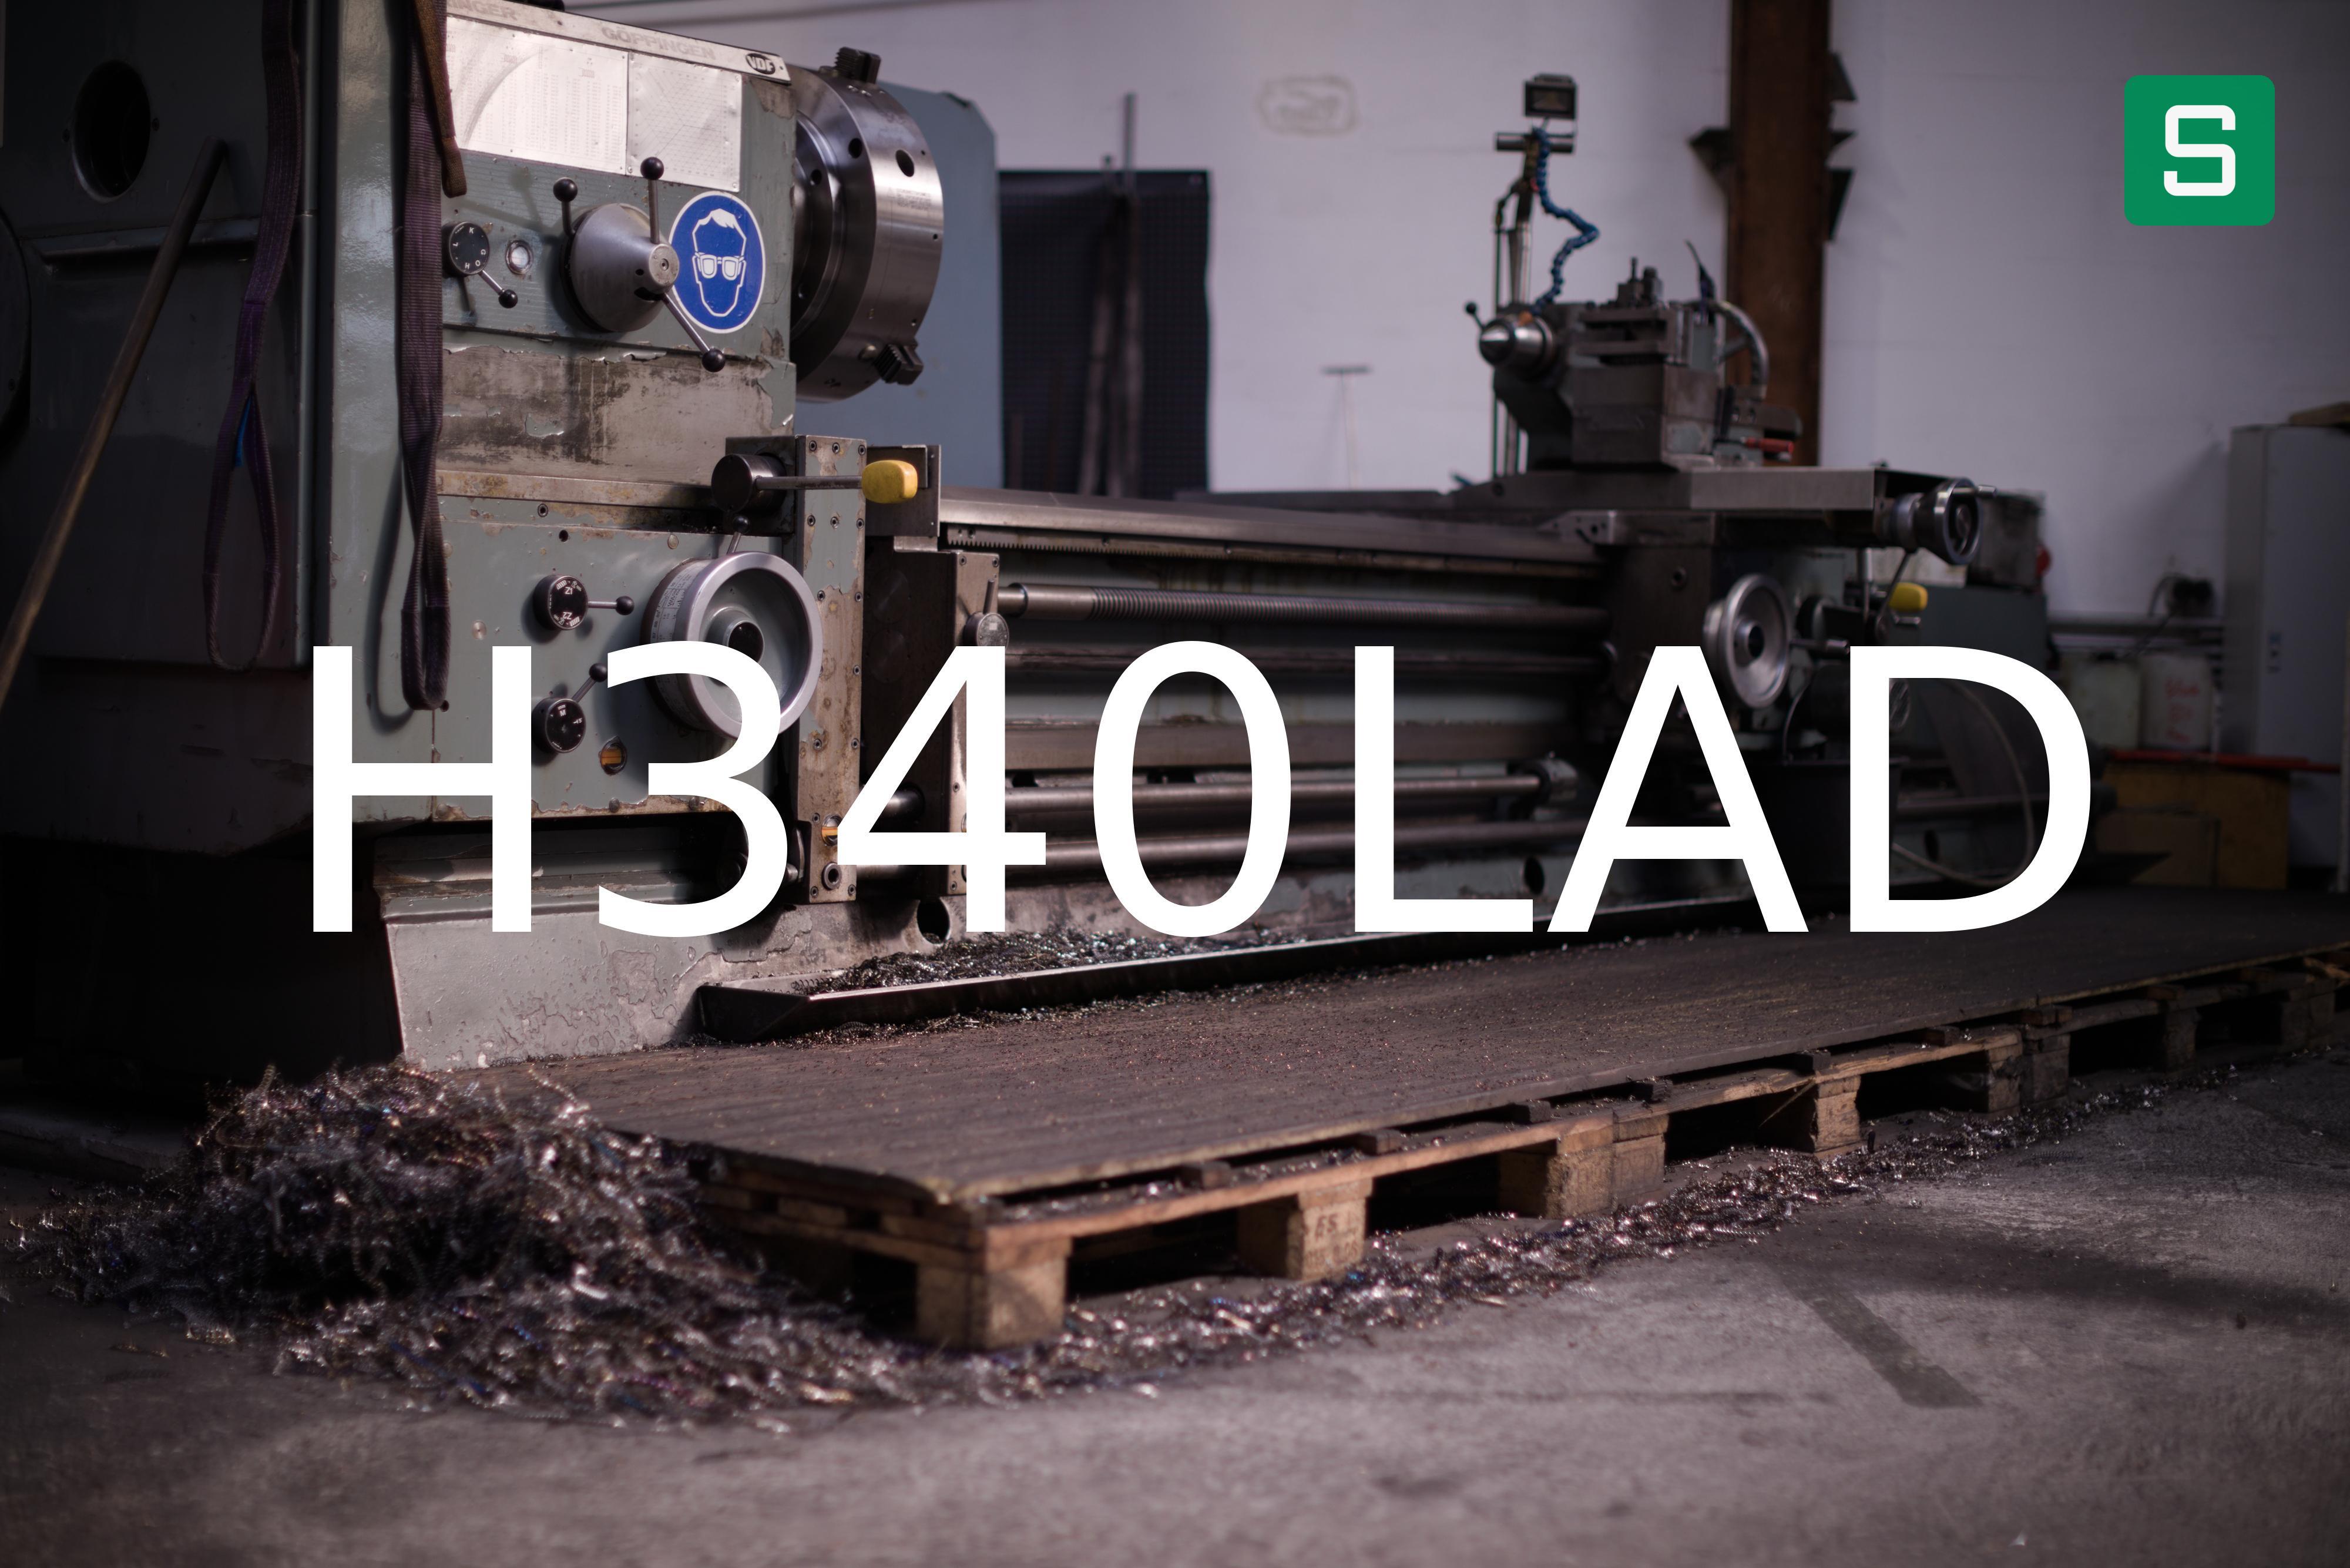 Steel Material: H340LAD